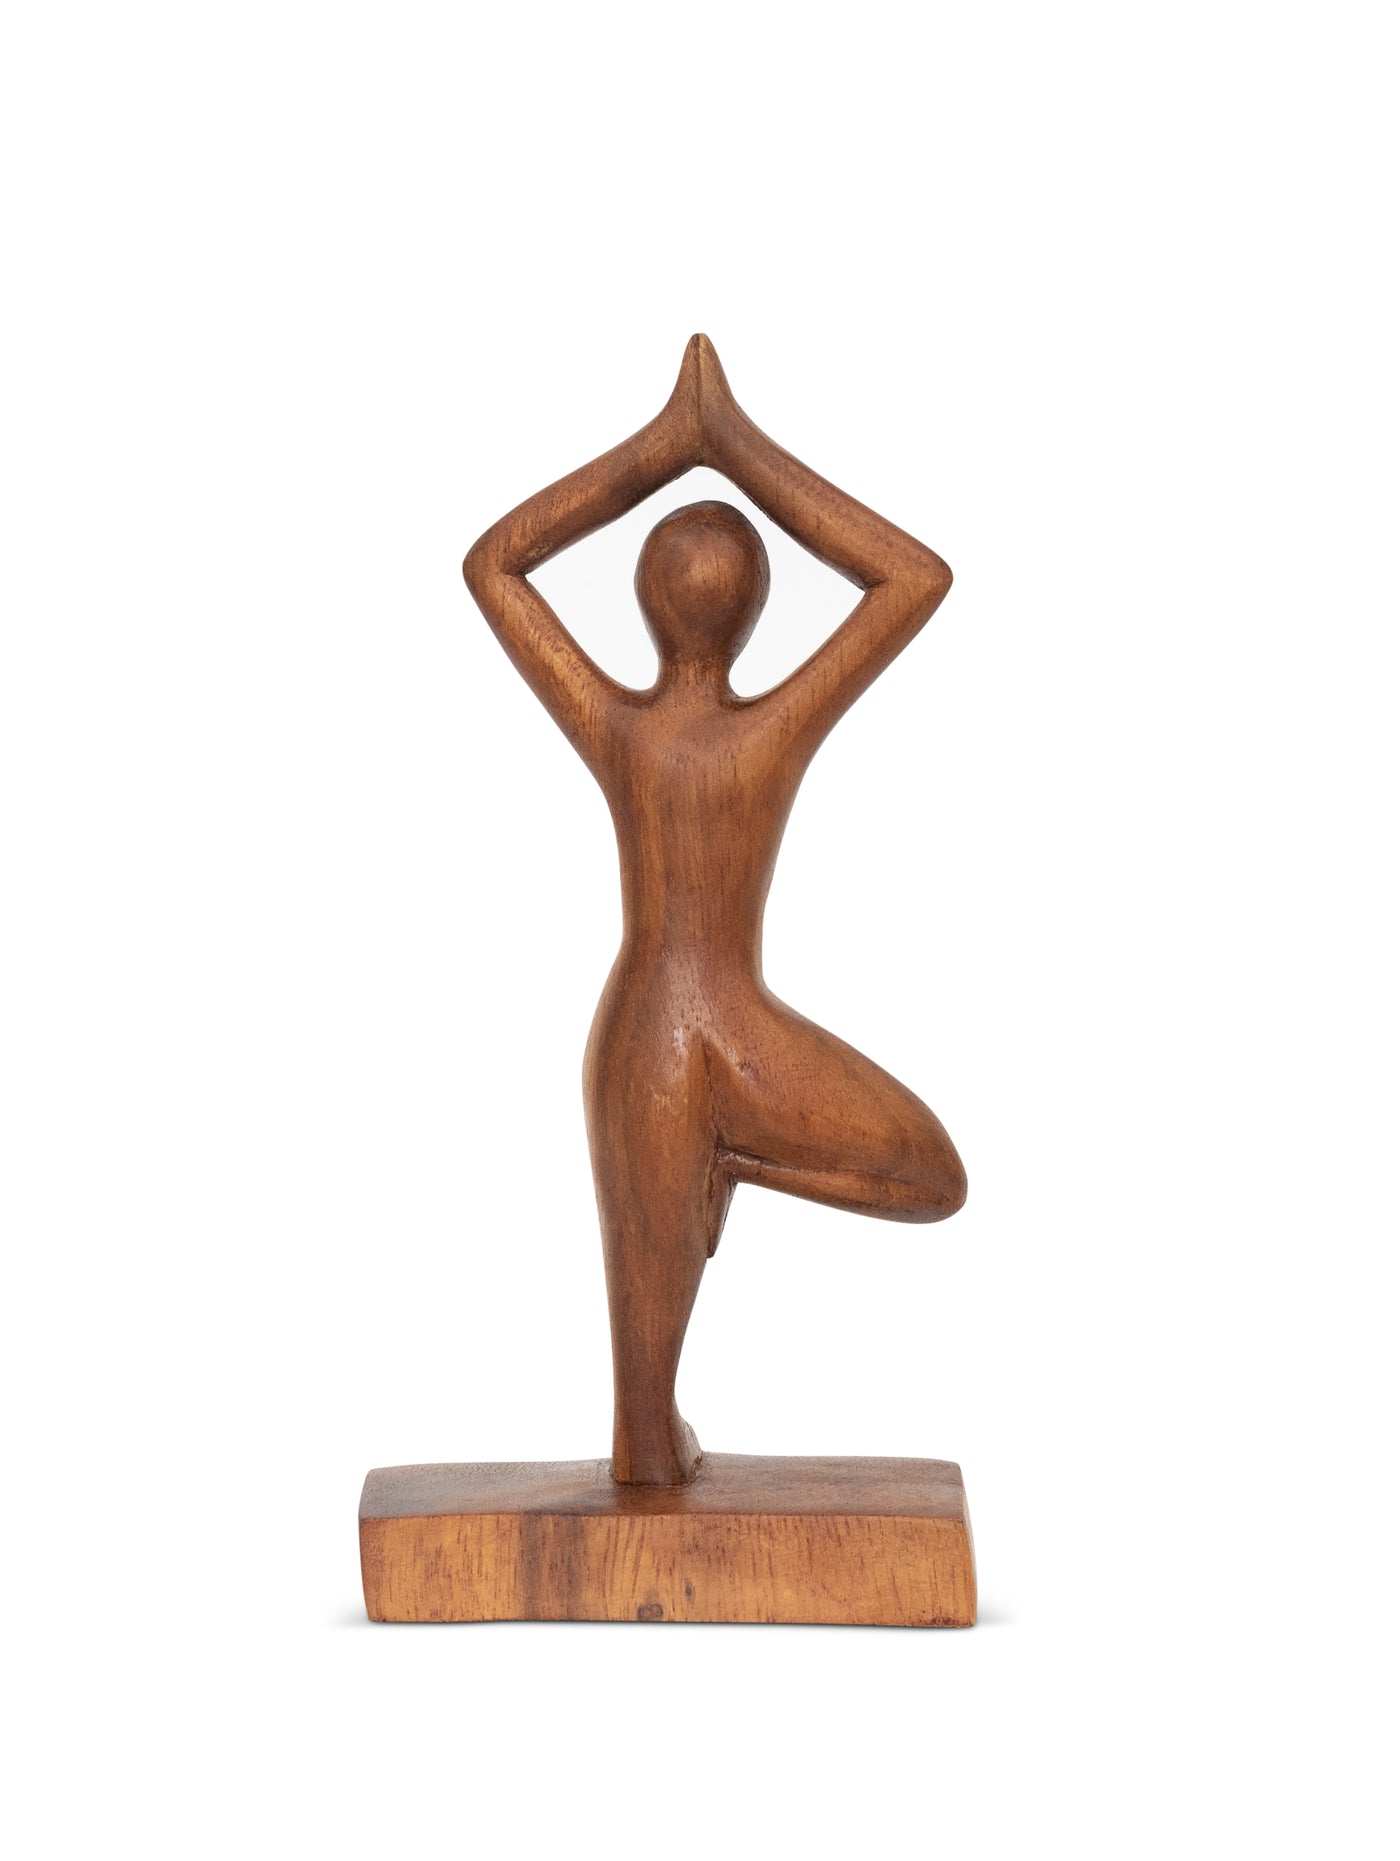 8" Wooden Handmade Mini Yoga Figurines, Yoga Pose Statue, Yoga Room Studio Decor, Mindful Home Decor Yogi Gift, Decorative Shelf Decor Objects - Tree Pose